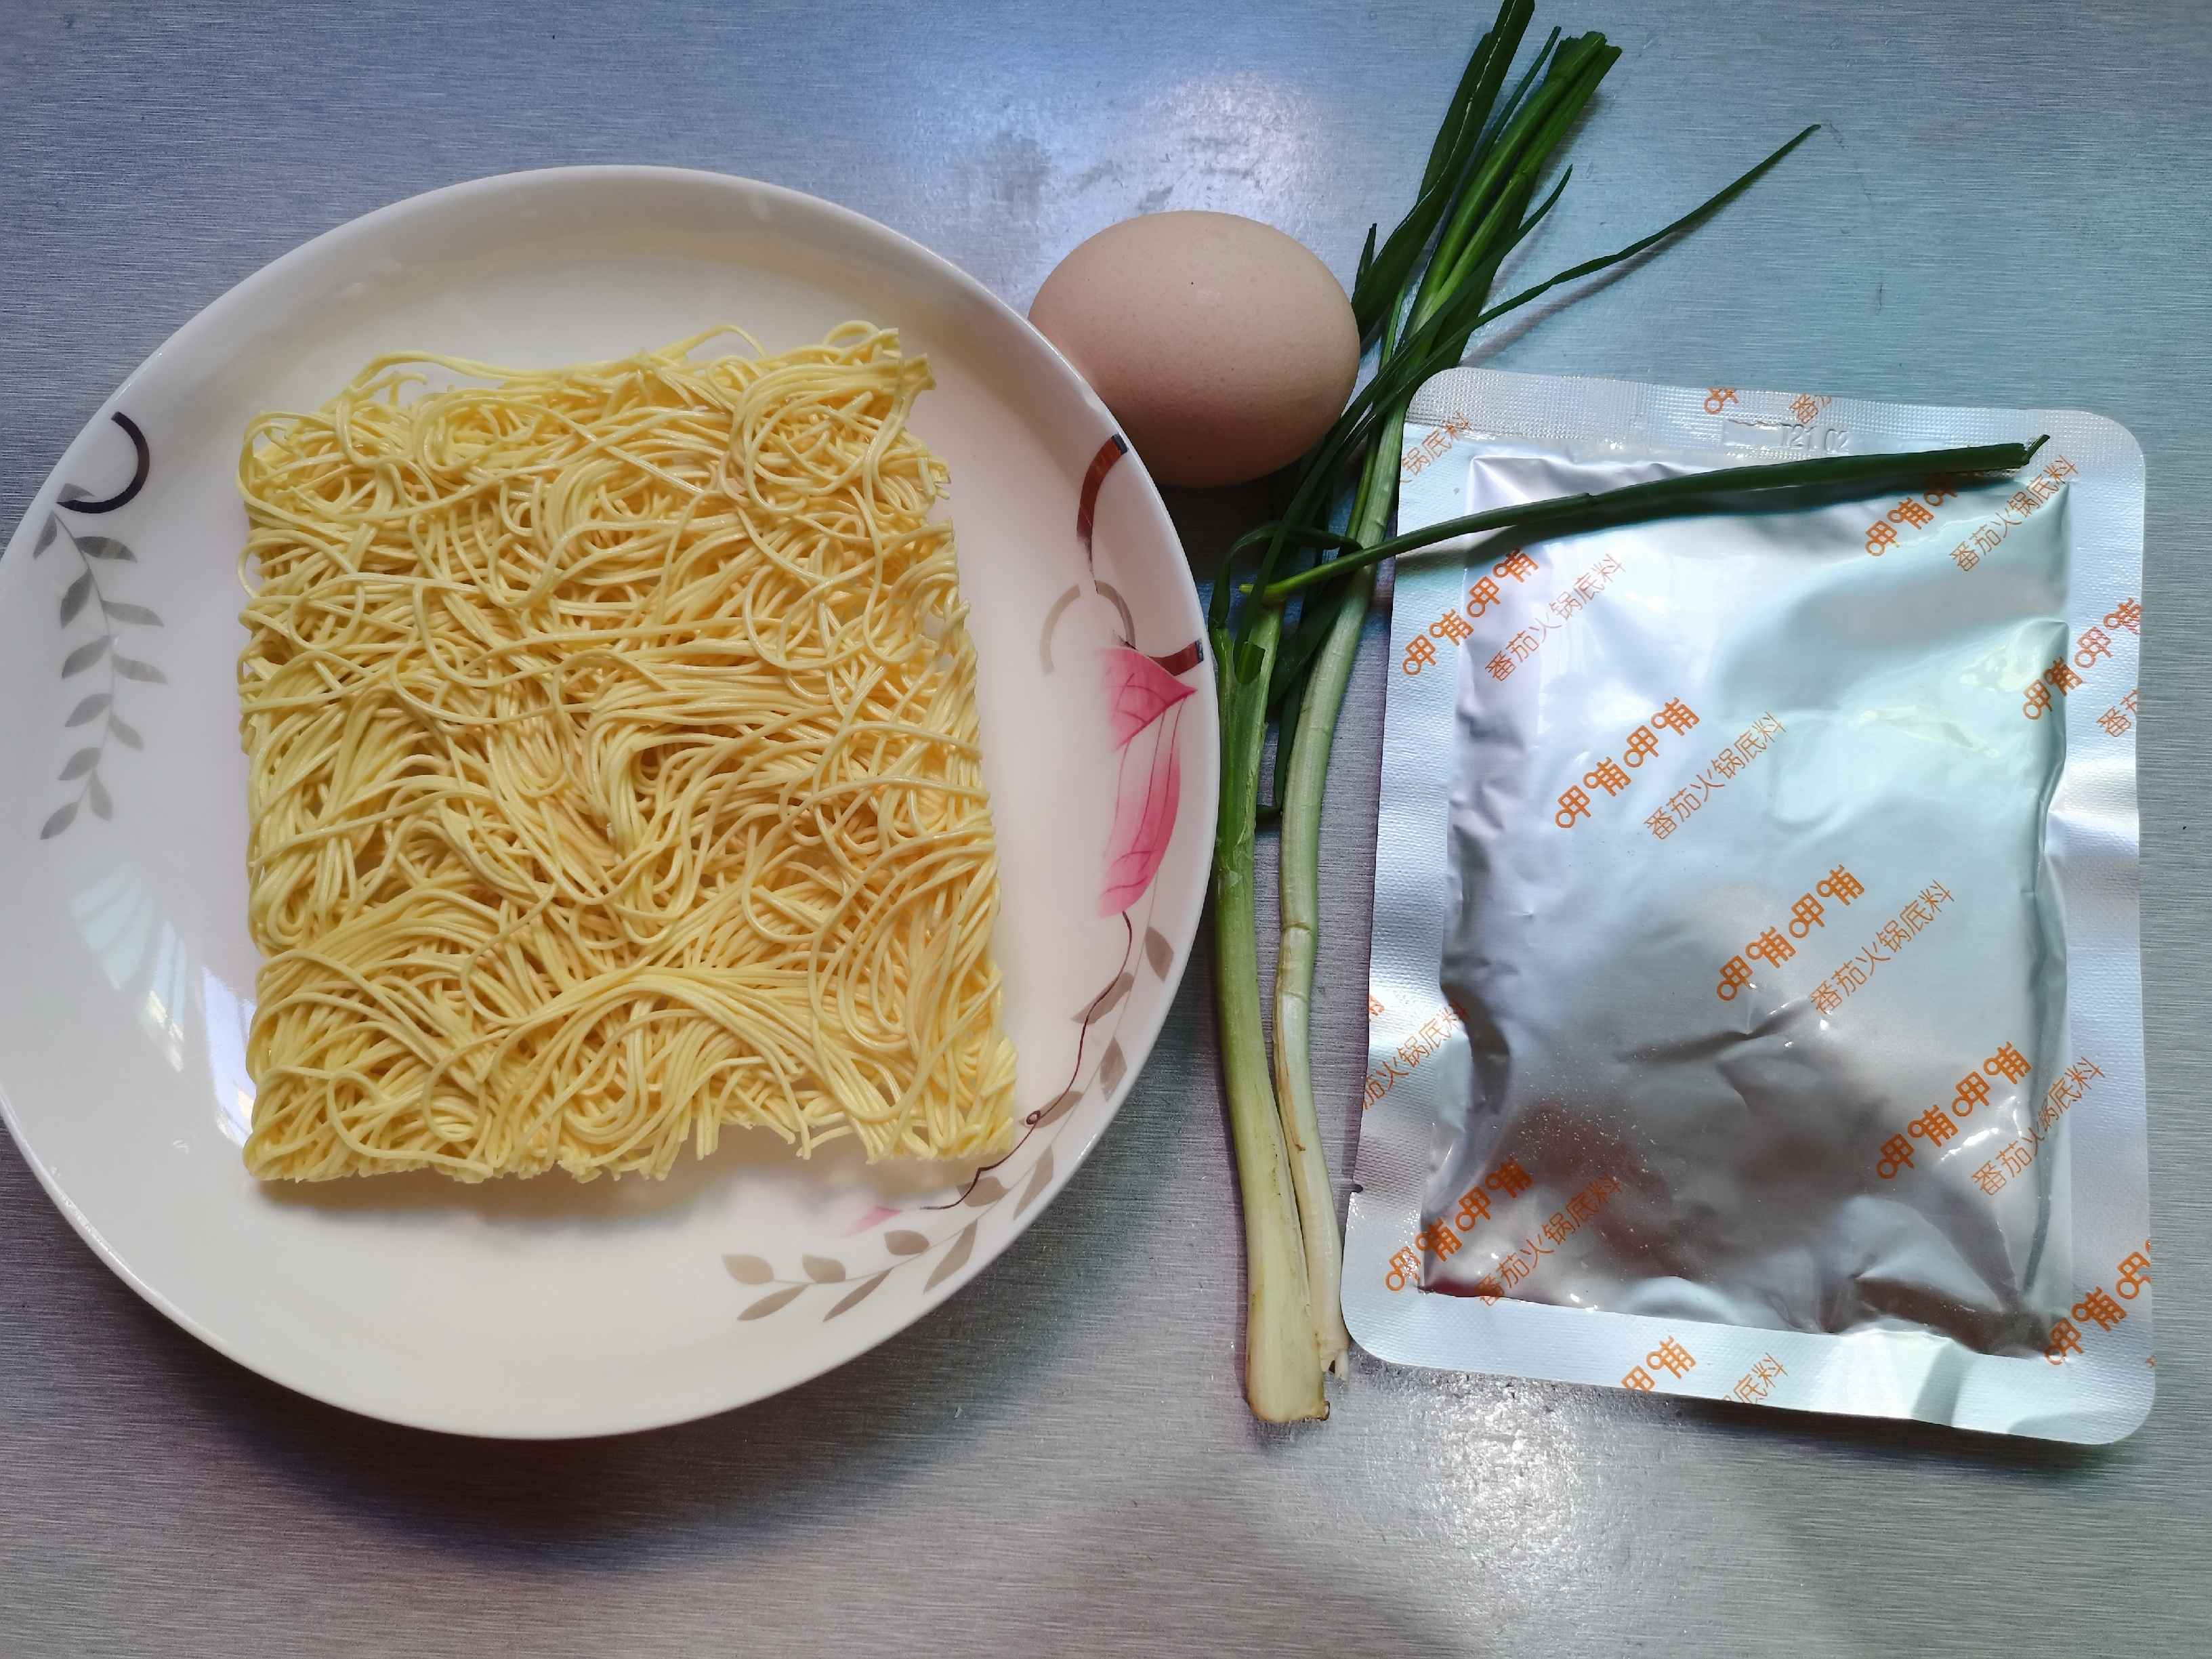 Egg Noodles in Tomato Sauce recipe